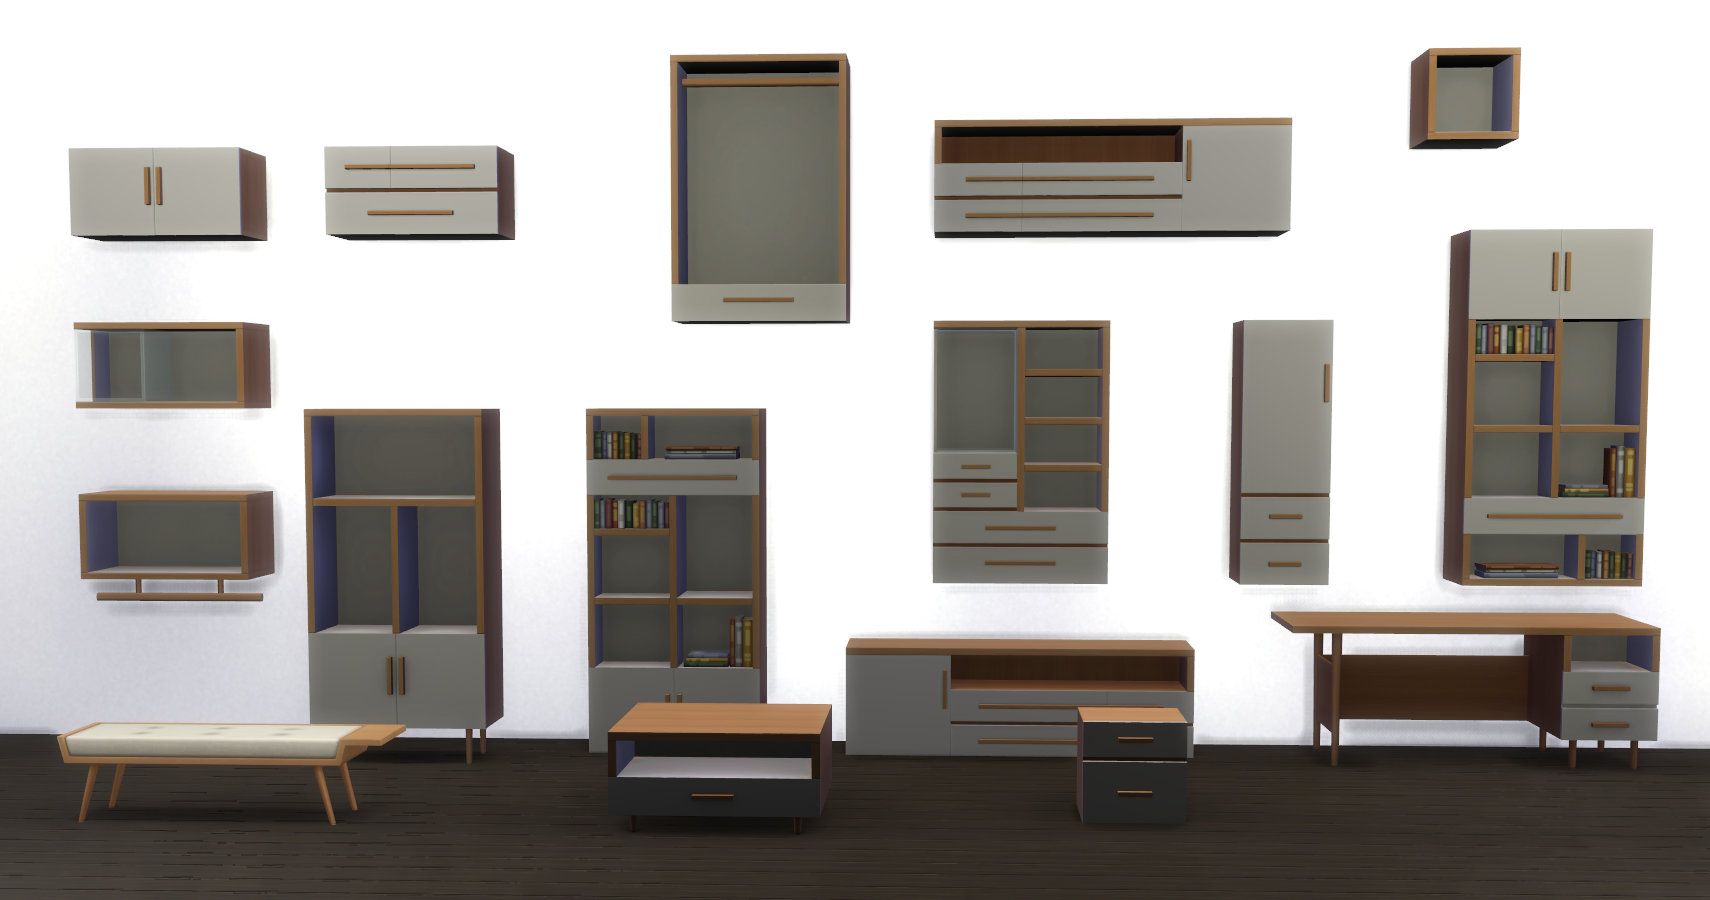 All square modular furniture